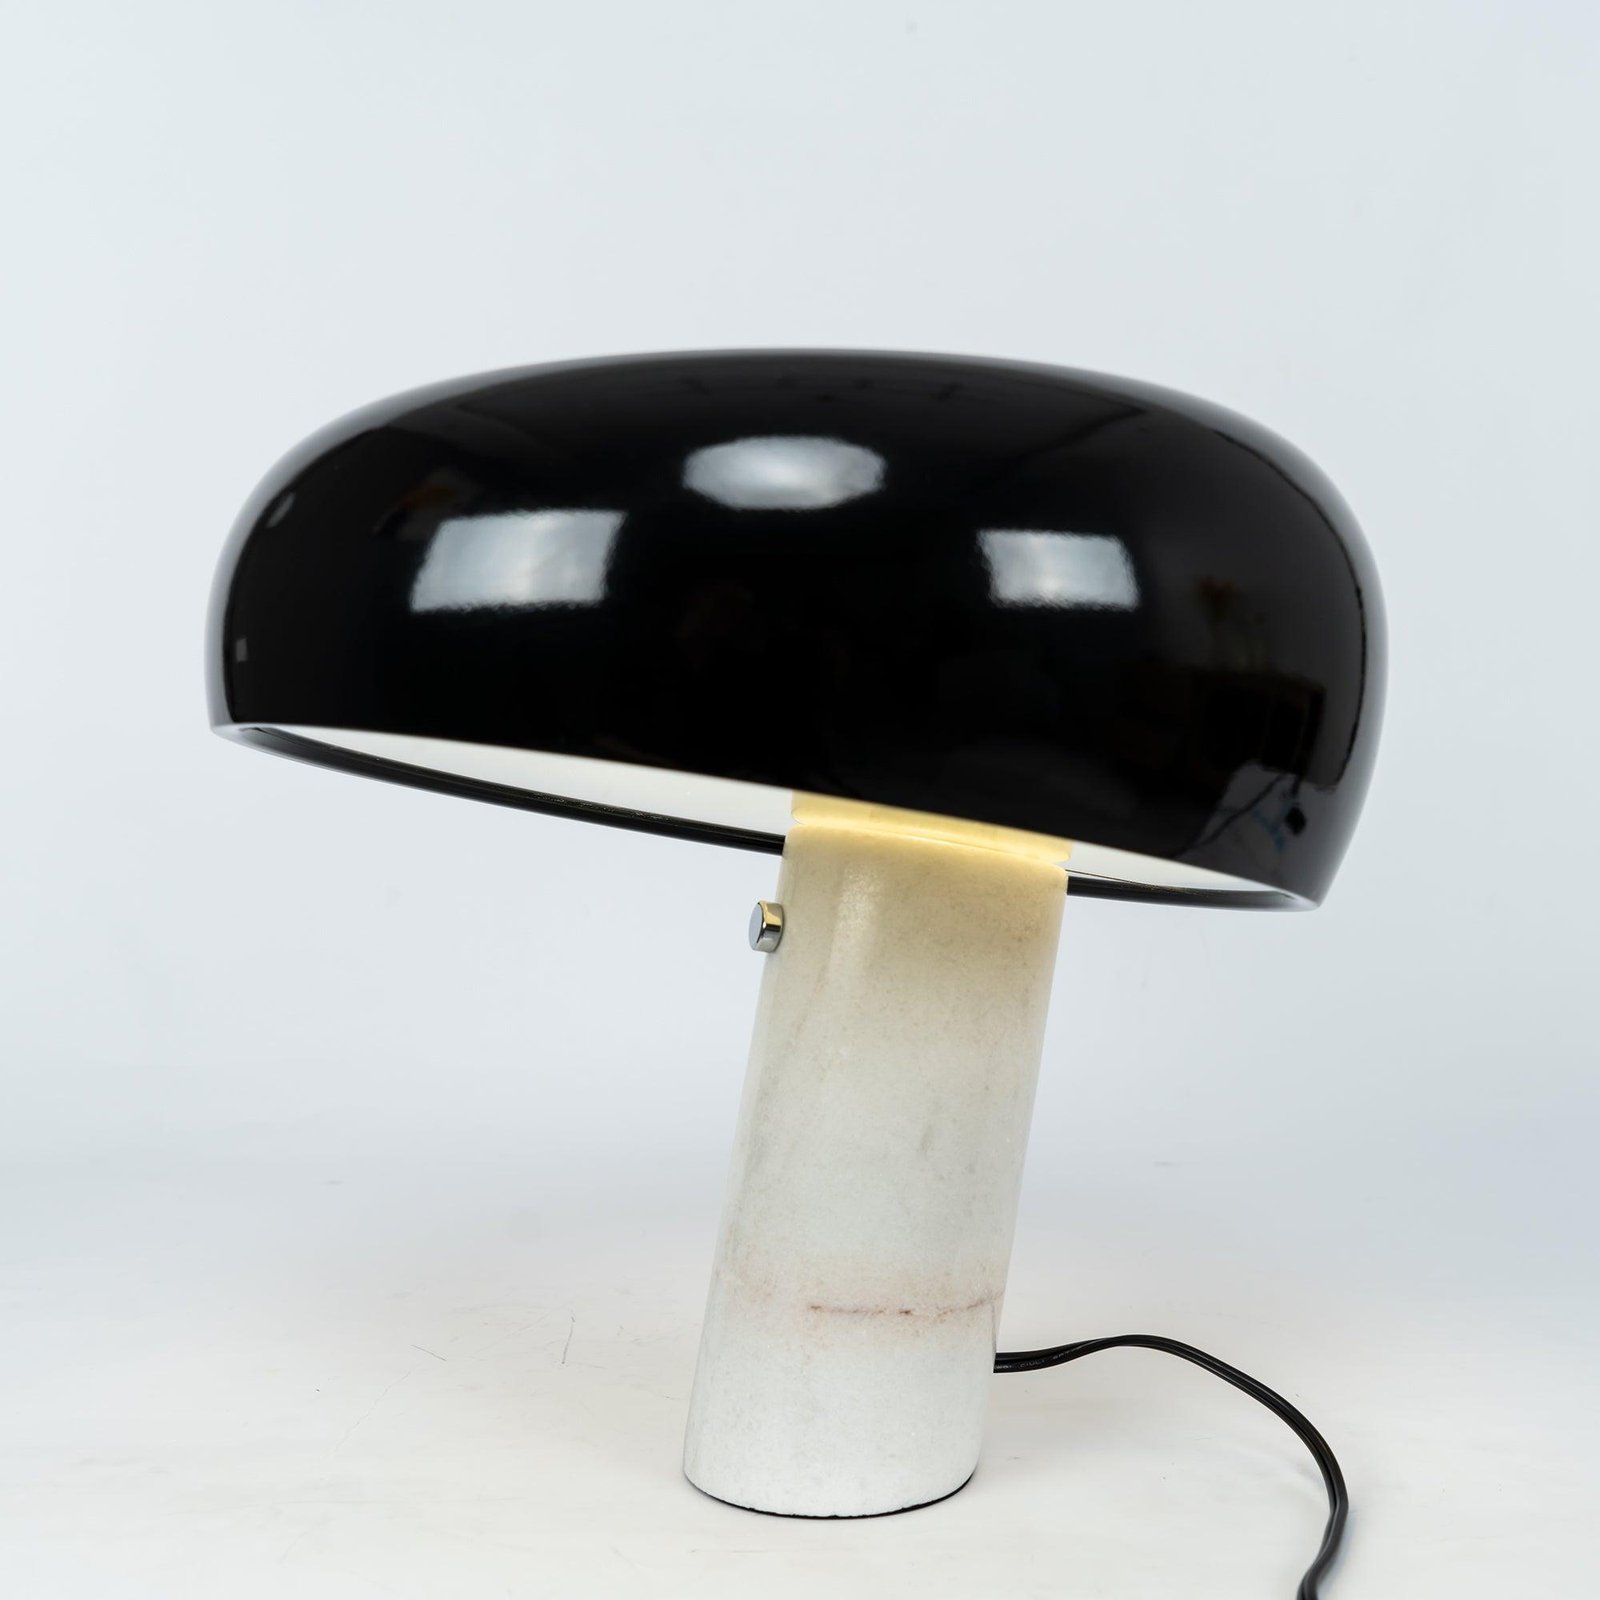 Black Art Marble Table Lamp with EU Plug, Diameter 28cm x Height 26cm